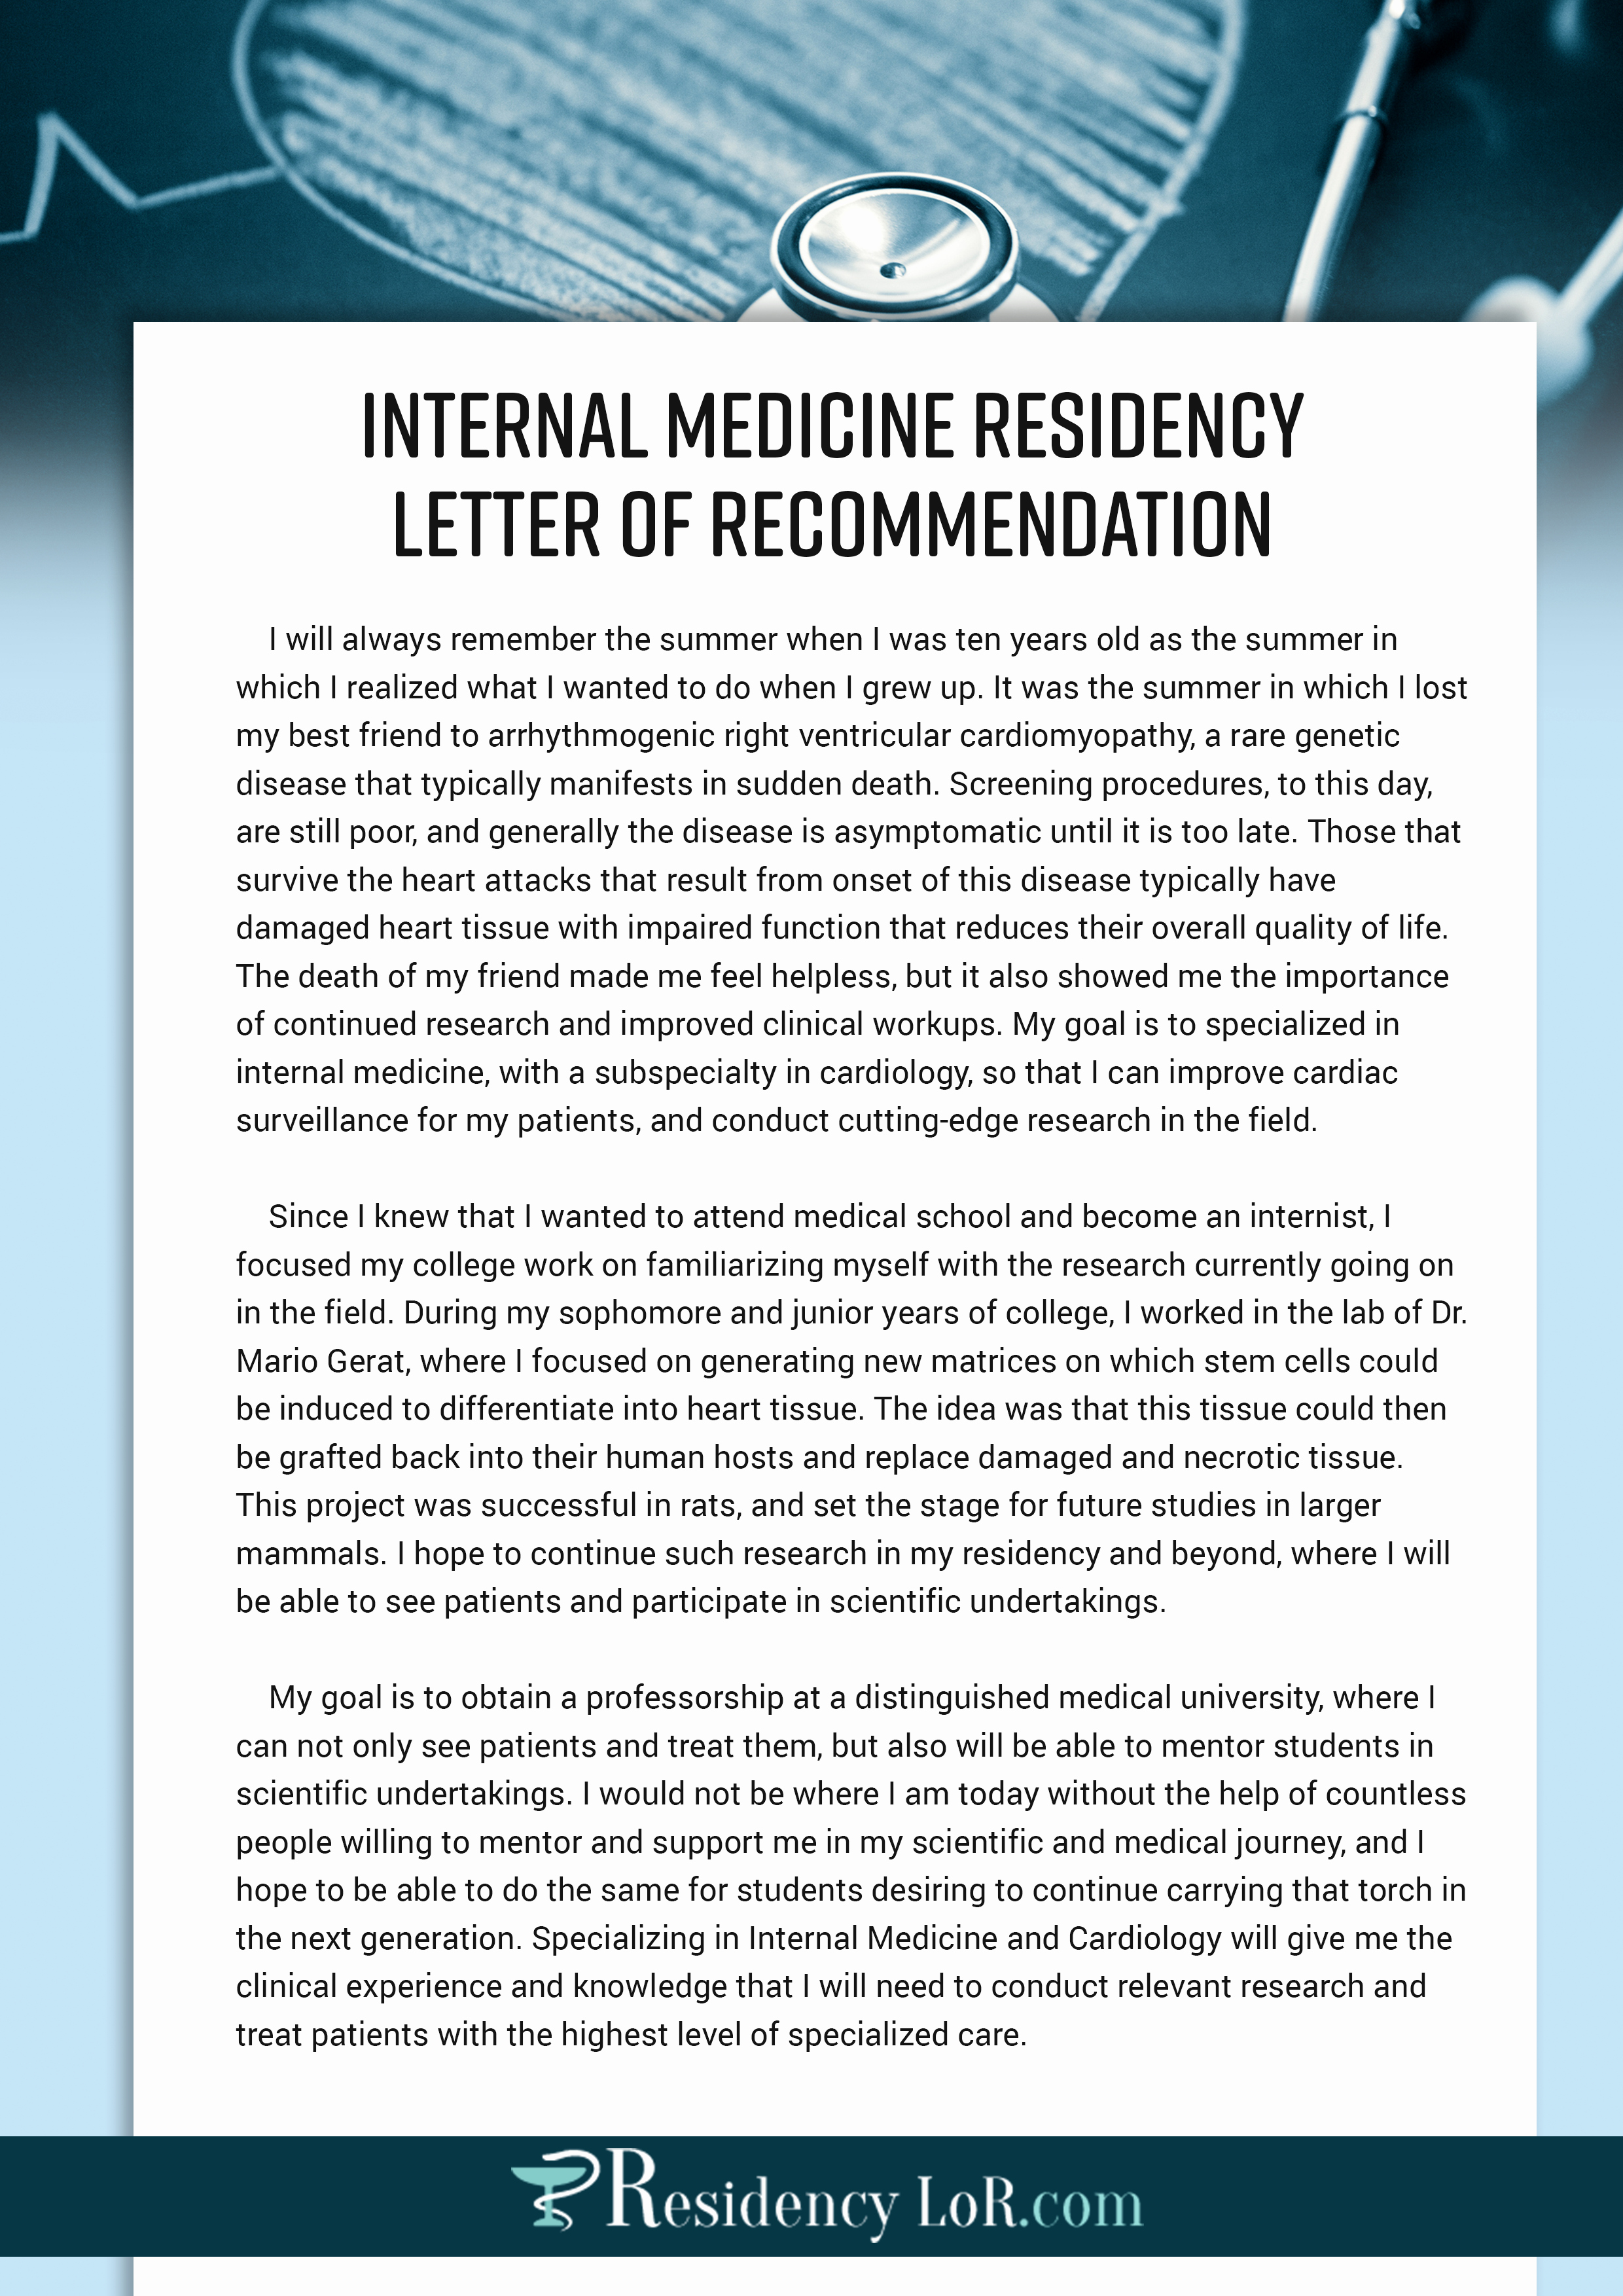 Letter Of Recommendation Residency Sample New Sample Letter Of Re Mendation for Internal Medicine